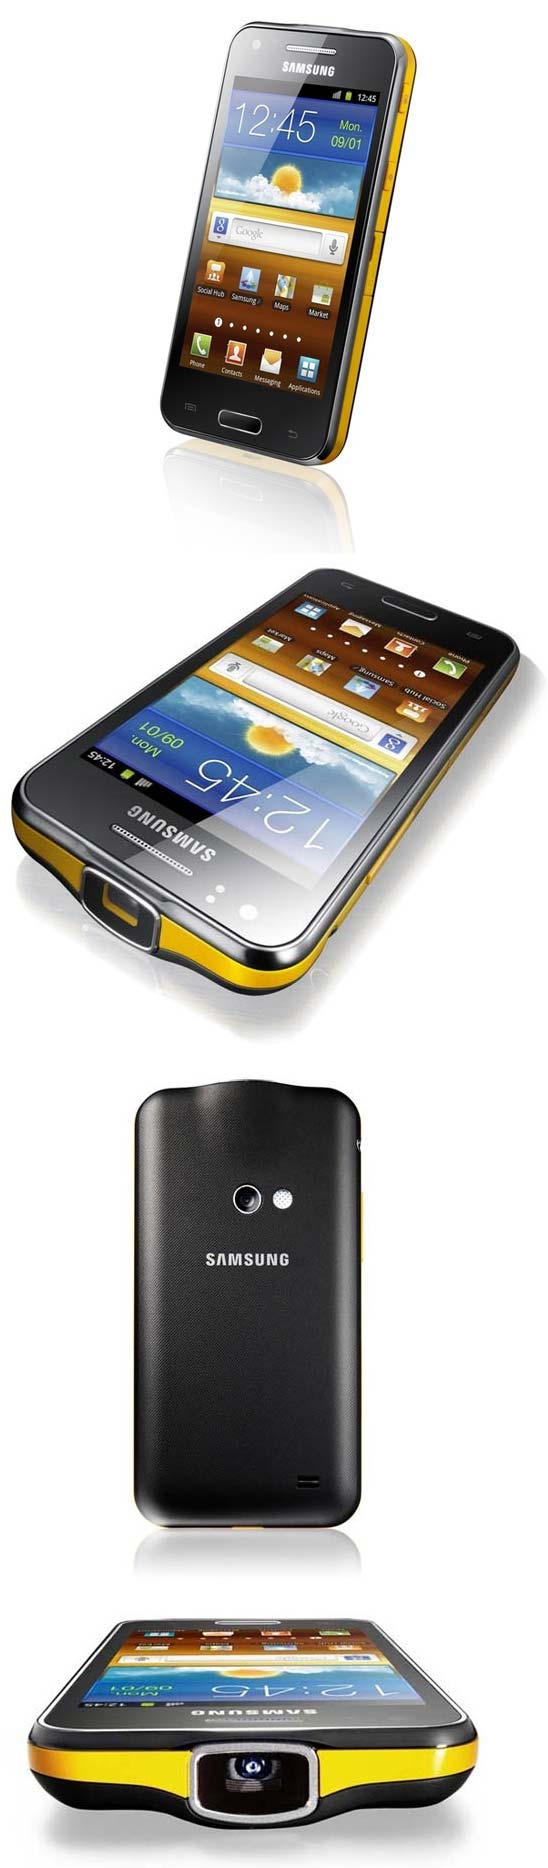 Samsung Galaxy Beam - смартфон со встроенным проектором